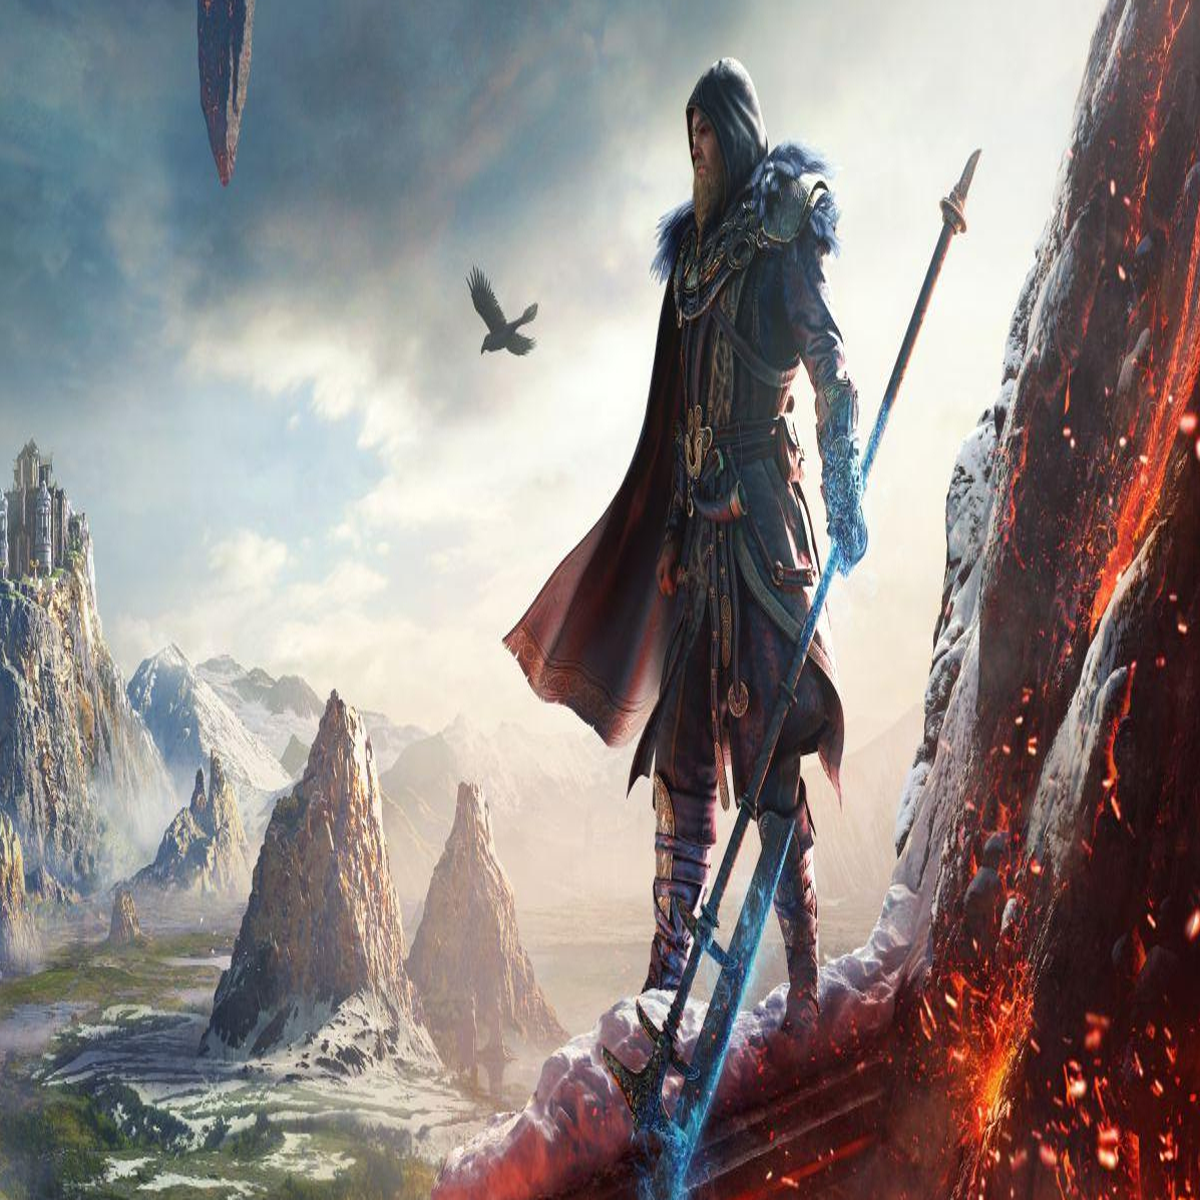 Preparing for Dawn of Ragnarok [Assassin's Creed Valhalla Guide] - Vamers